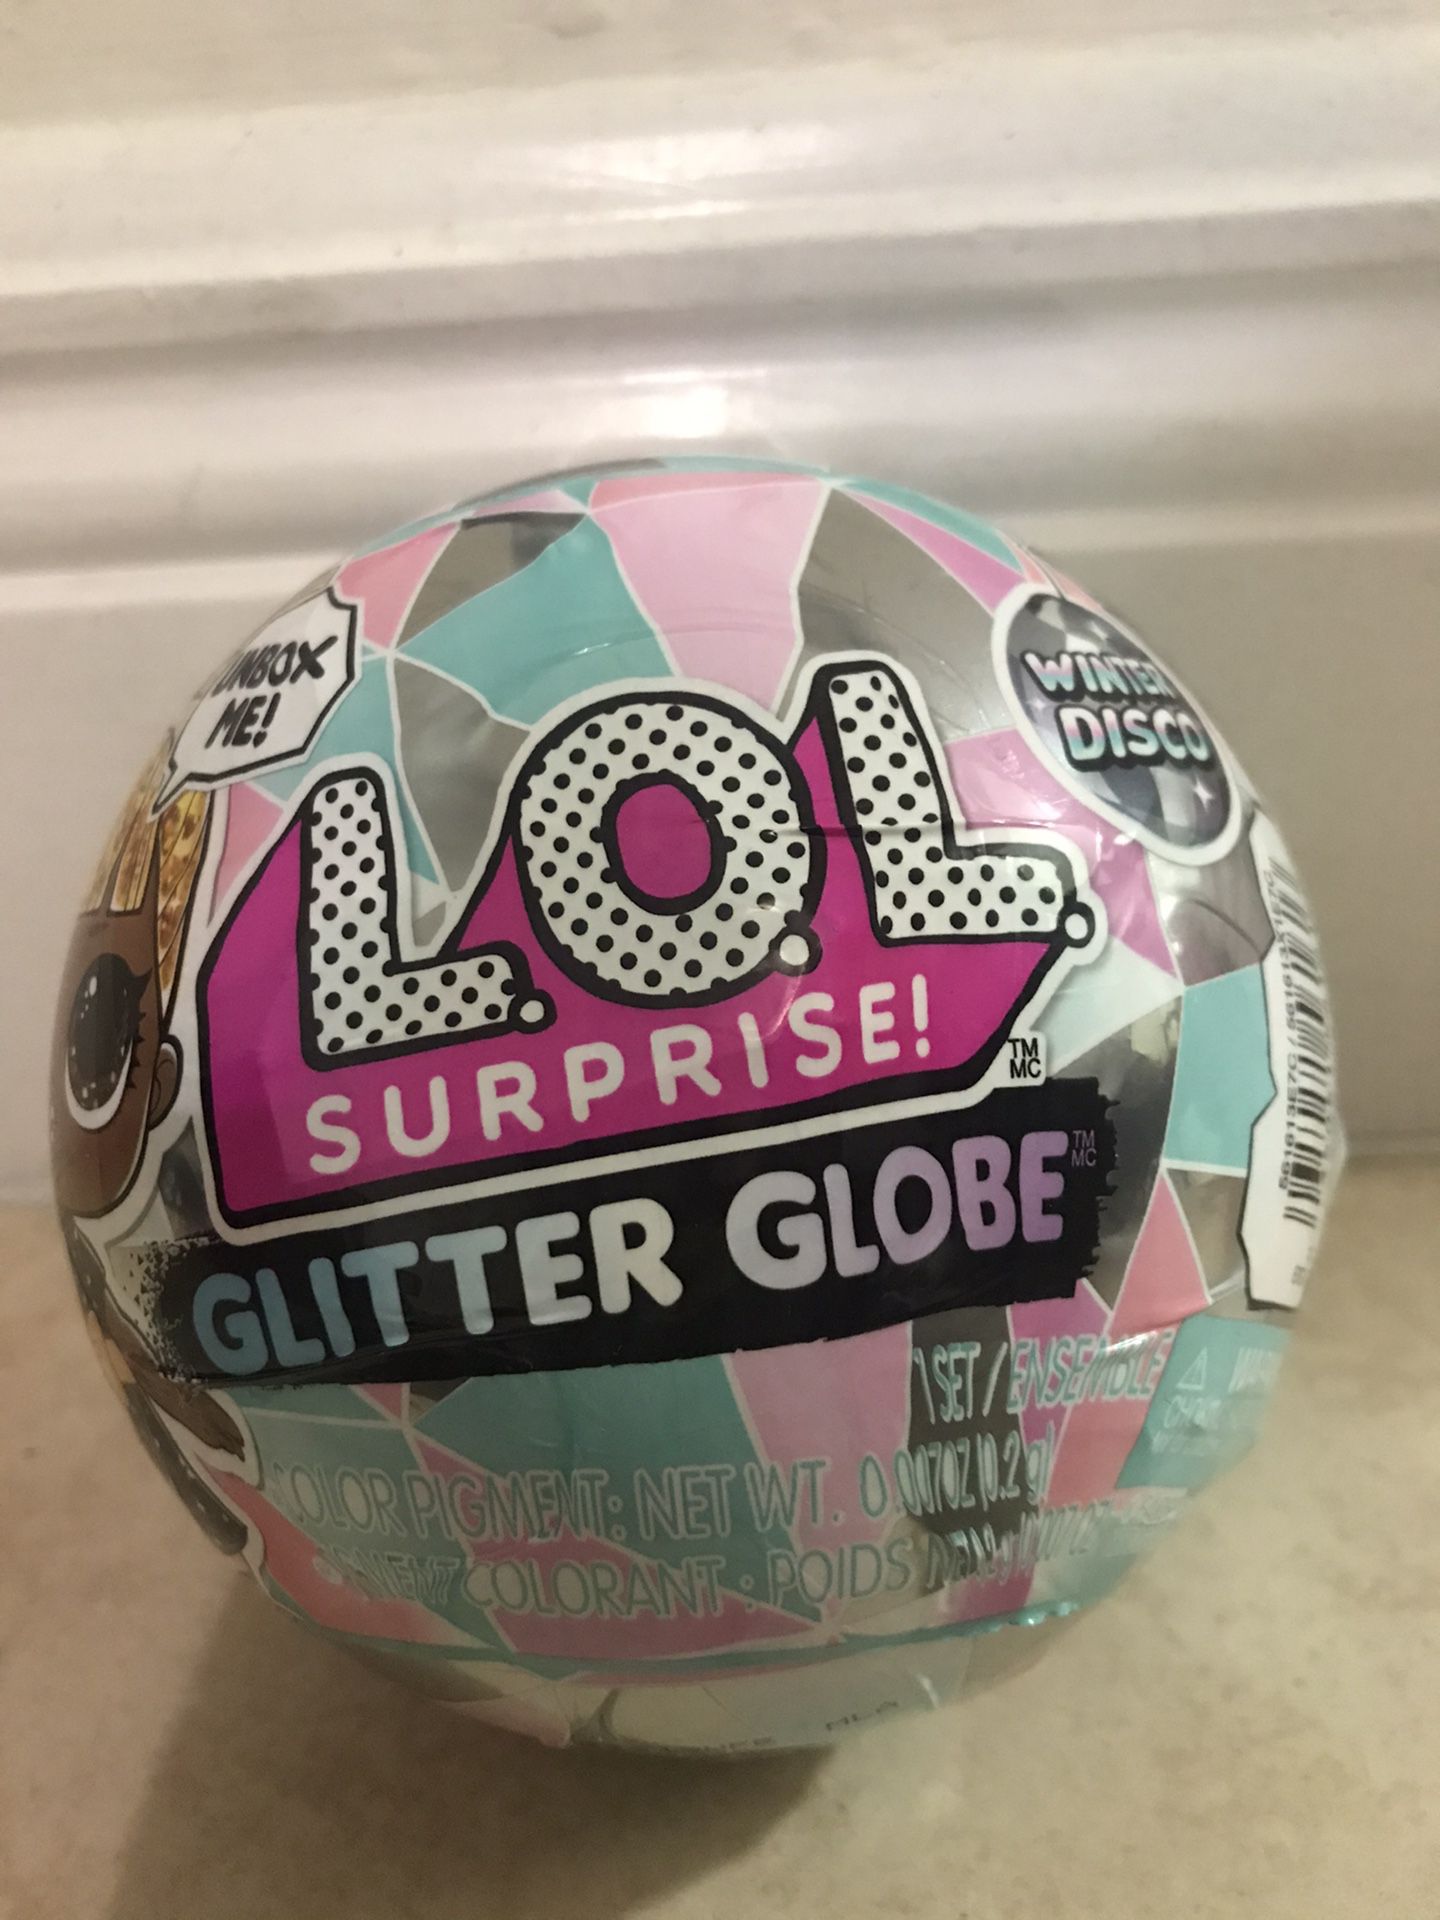 LOL Surprise glitter globe